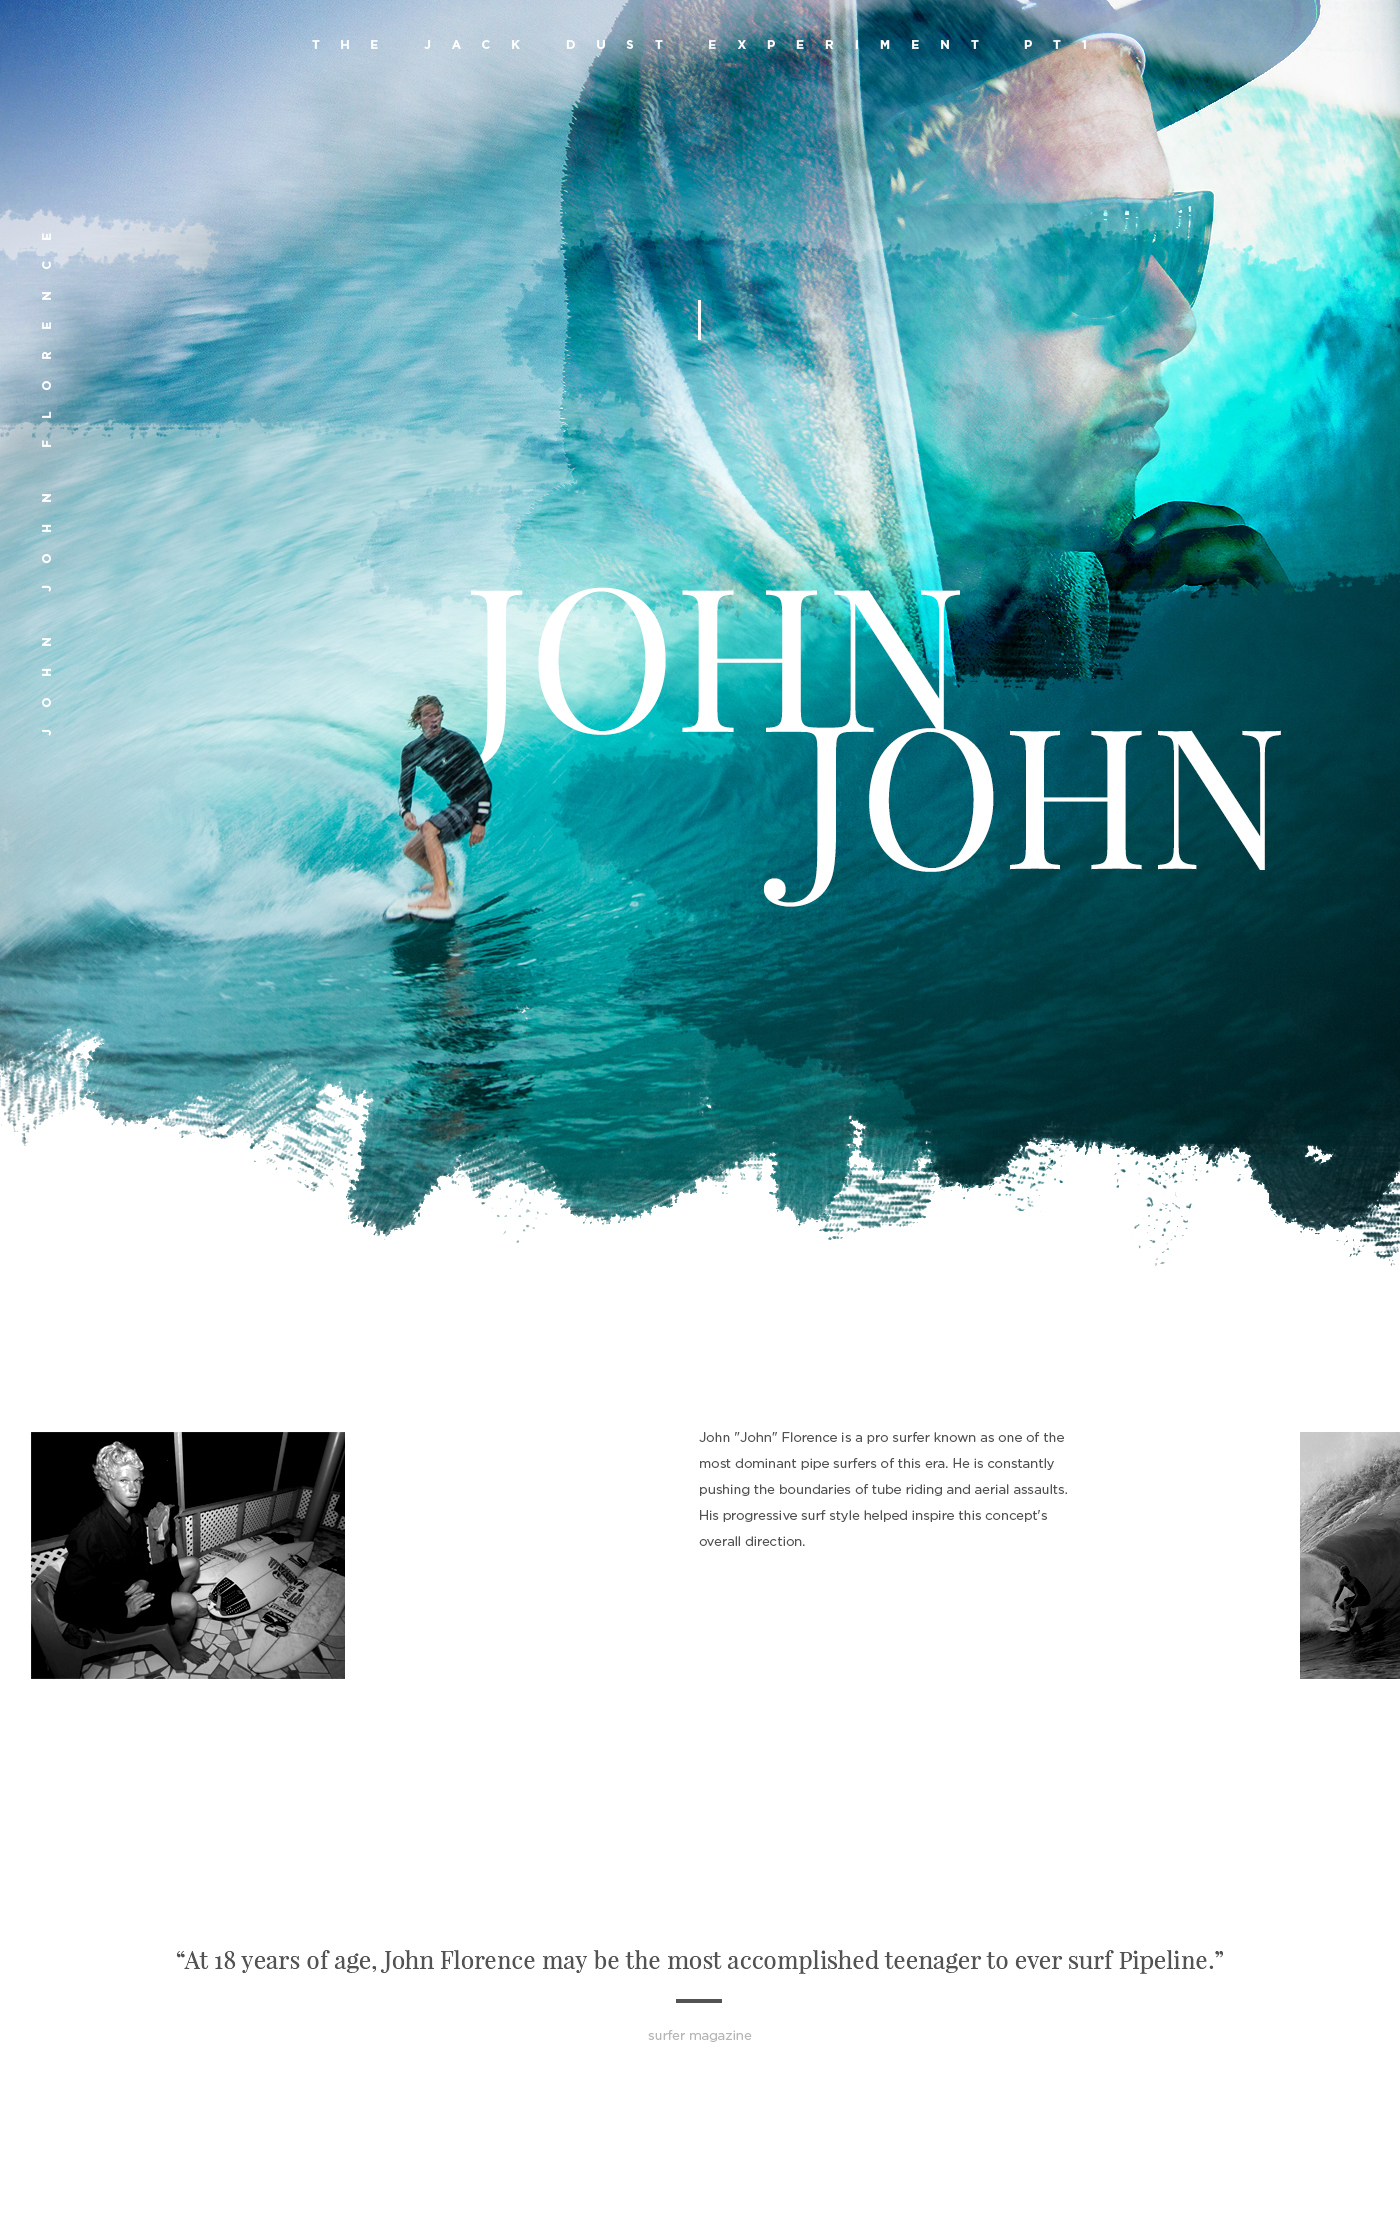 Surf surfing Ocean biography progressive commerce e-commerce landing page Website Web exploded grid design